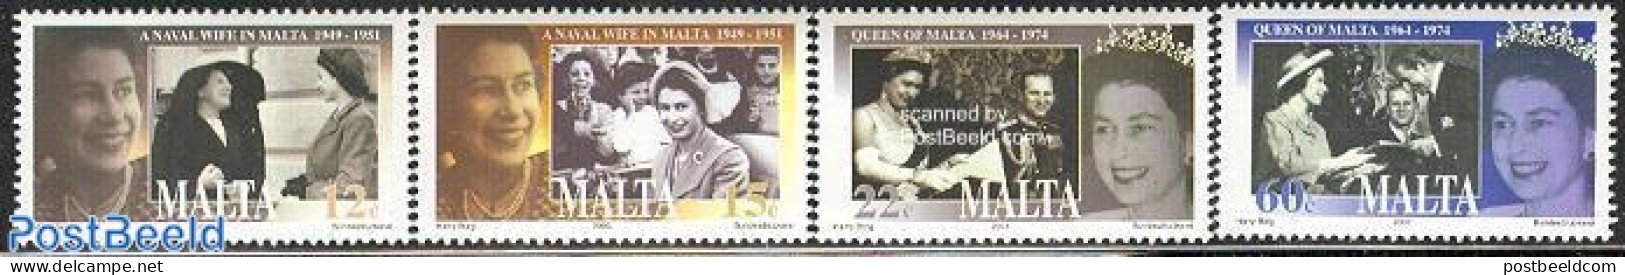 Malta 2003 Golden Jubilee 4v, Mint NH, History - Kings & Queens (Royalty) - Royalties, Royals